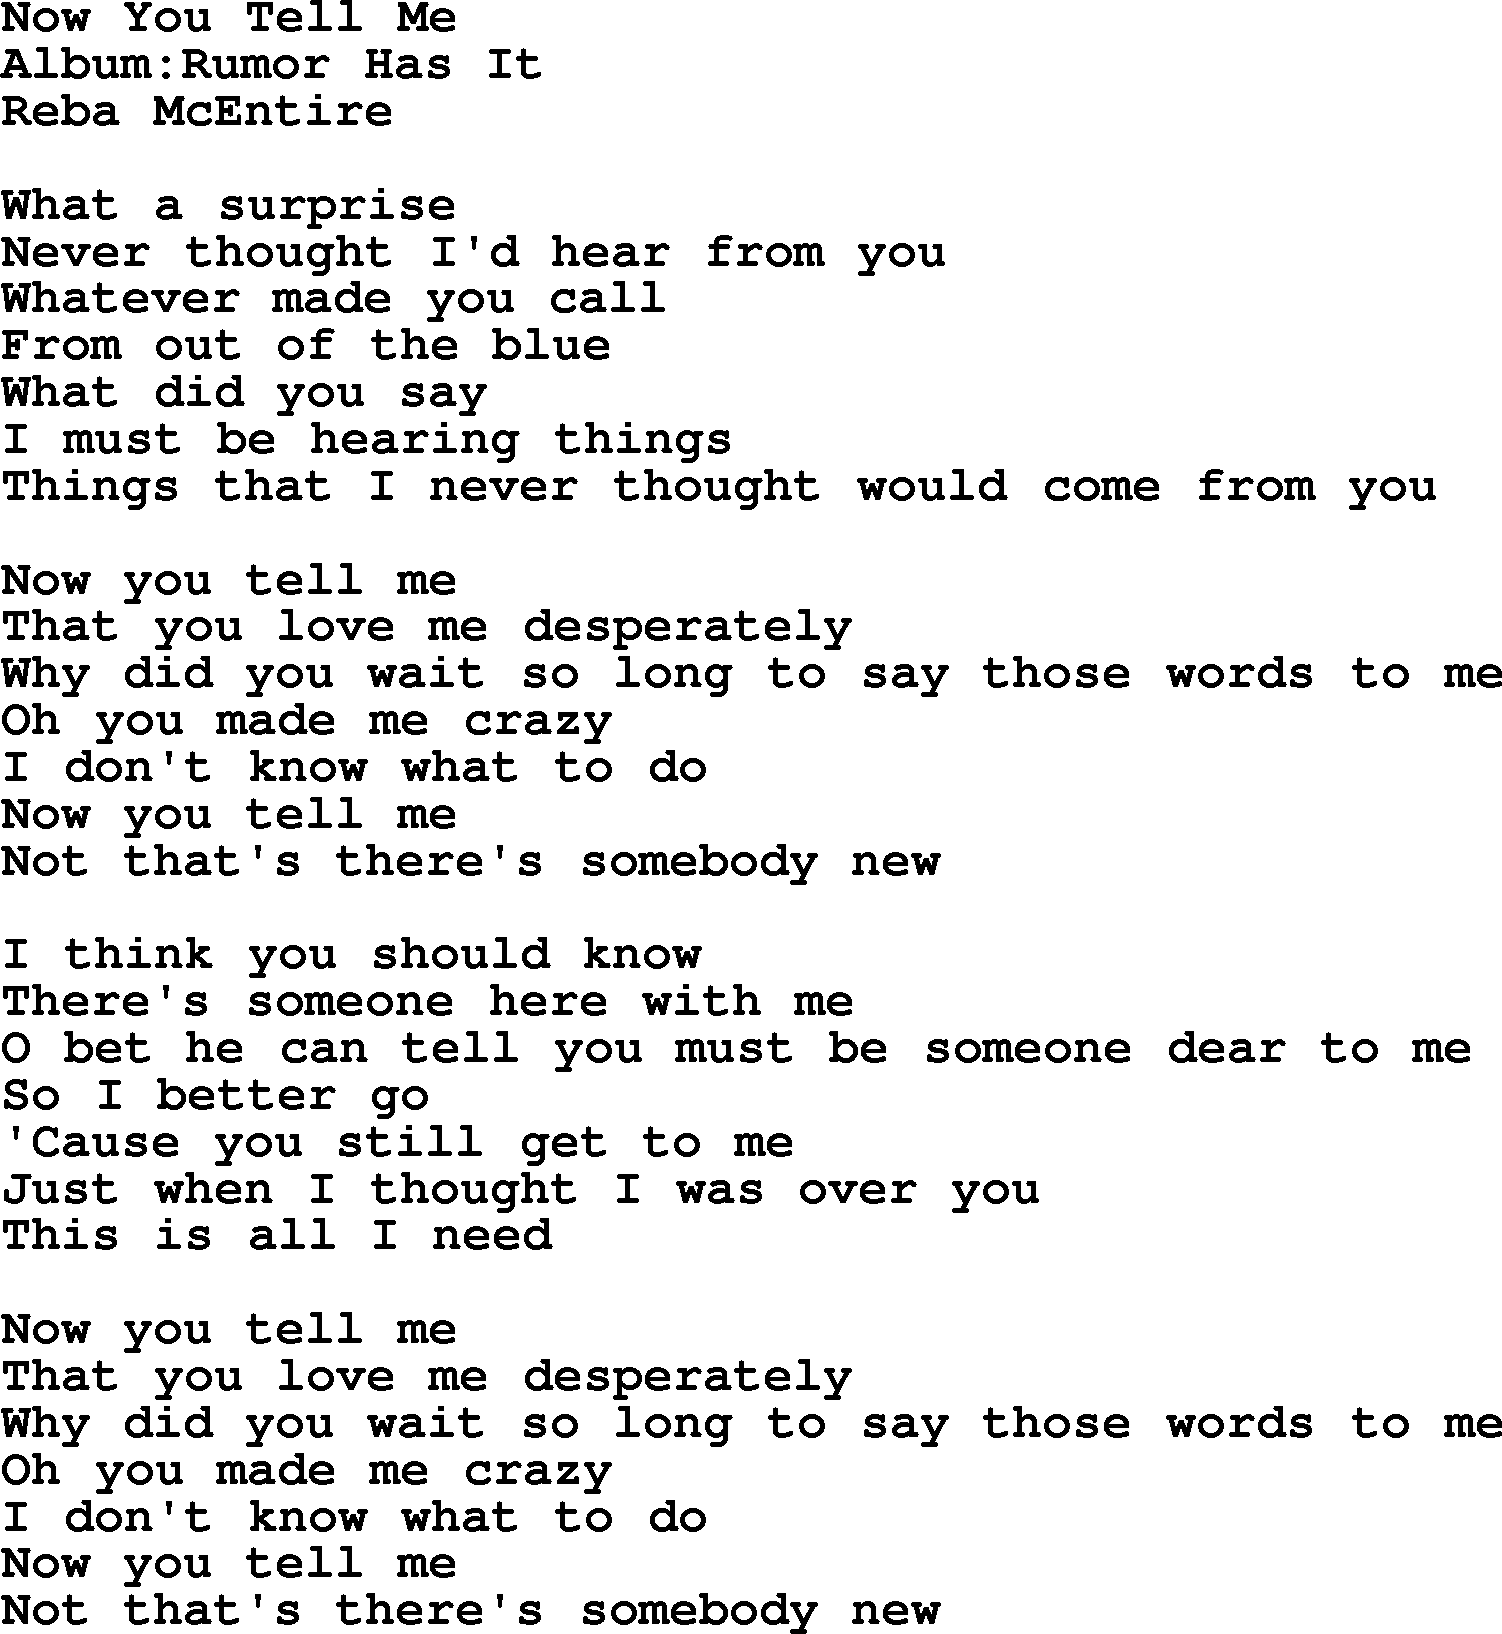 Reba McEntire song: Now You Tell Me lyrics